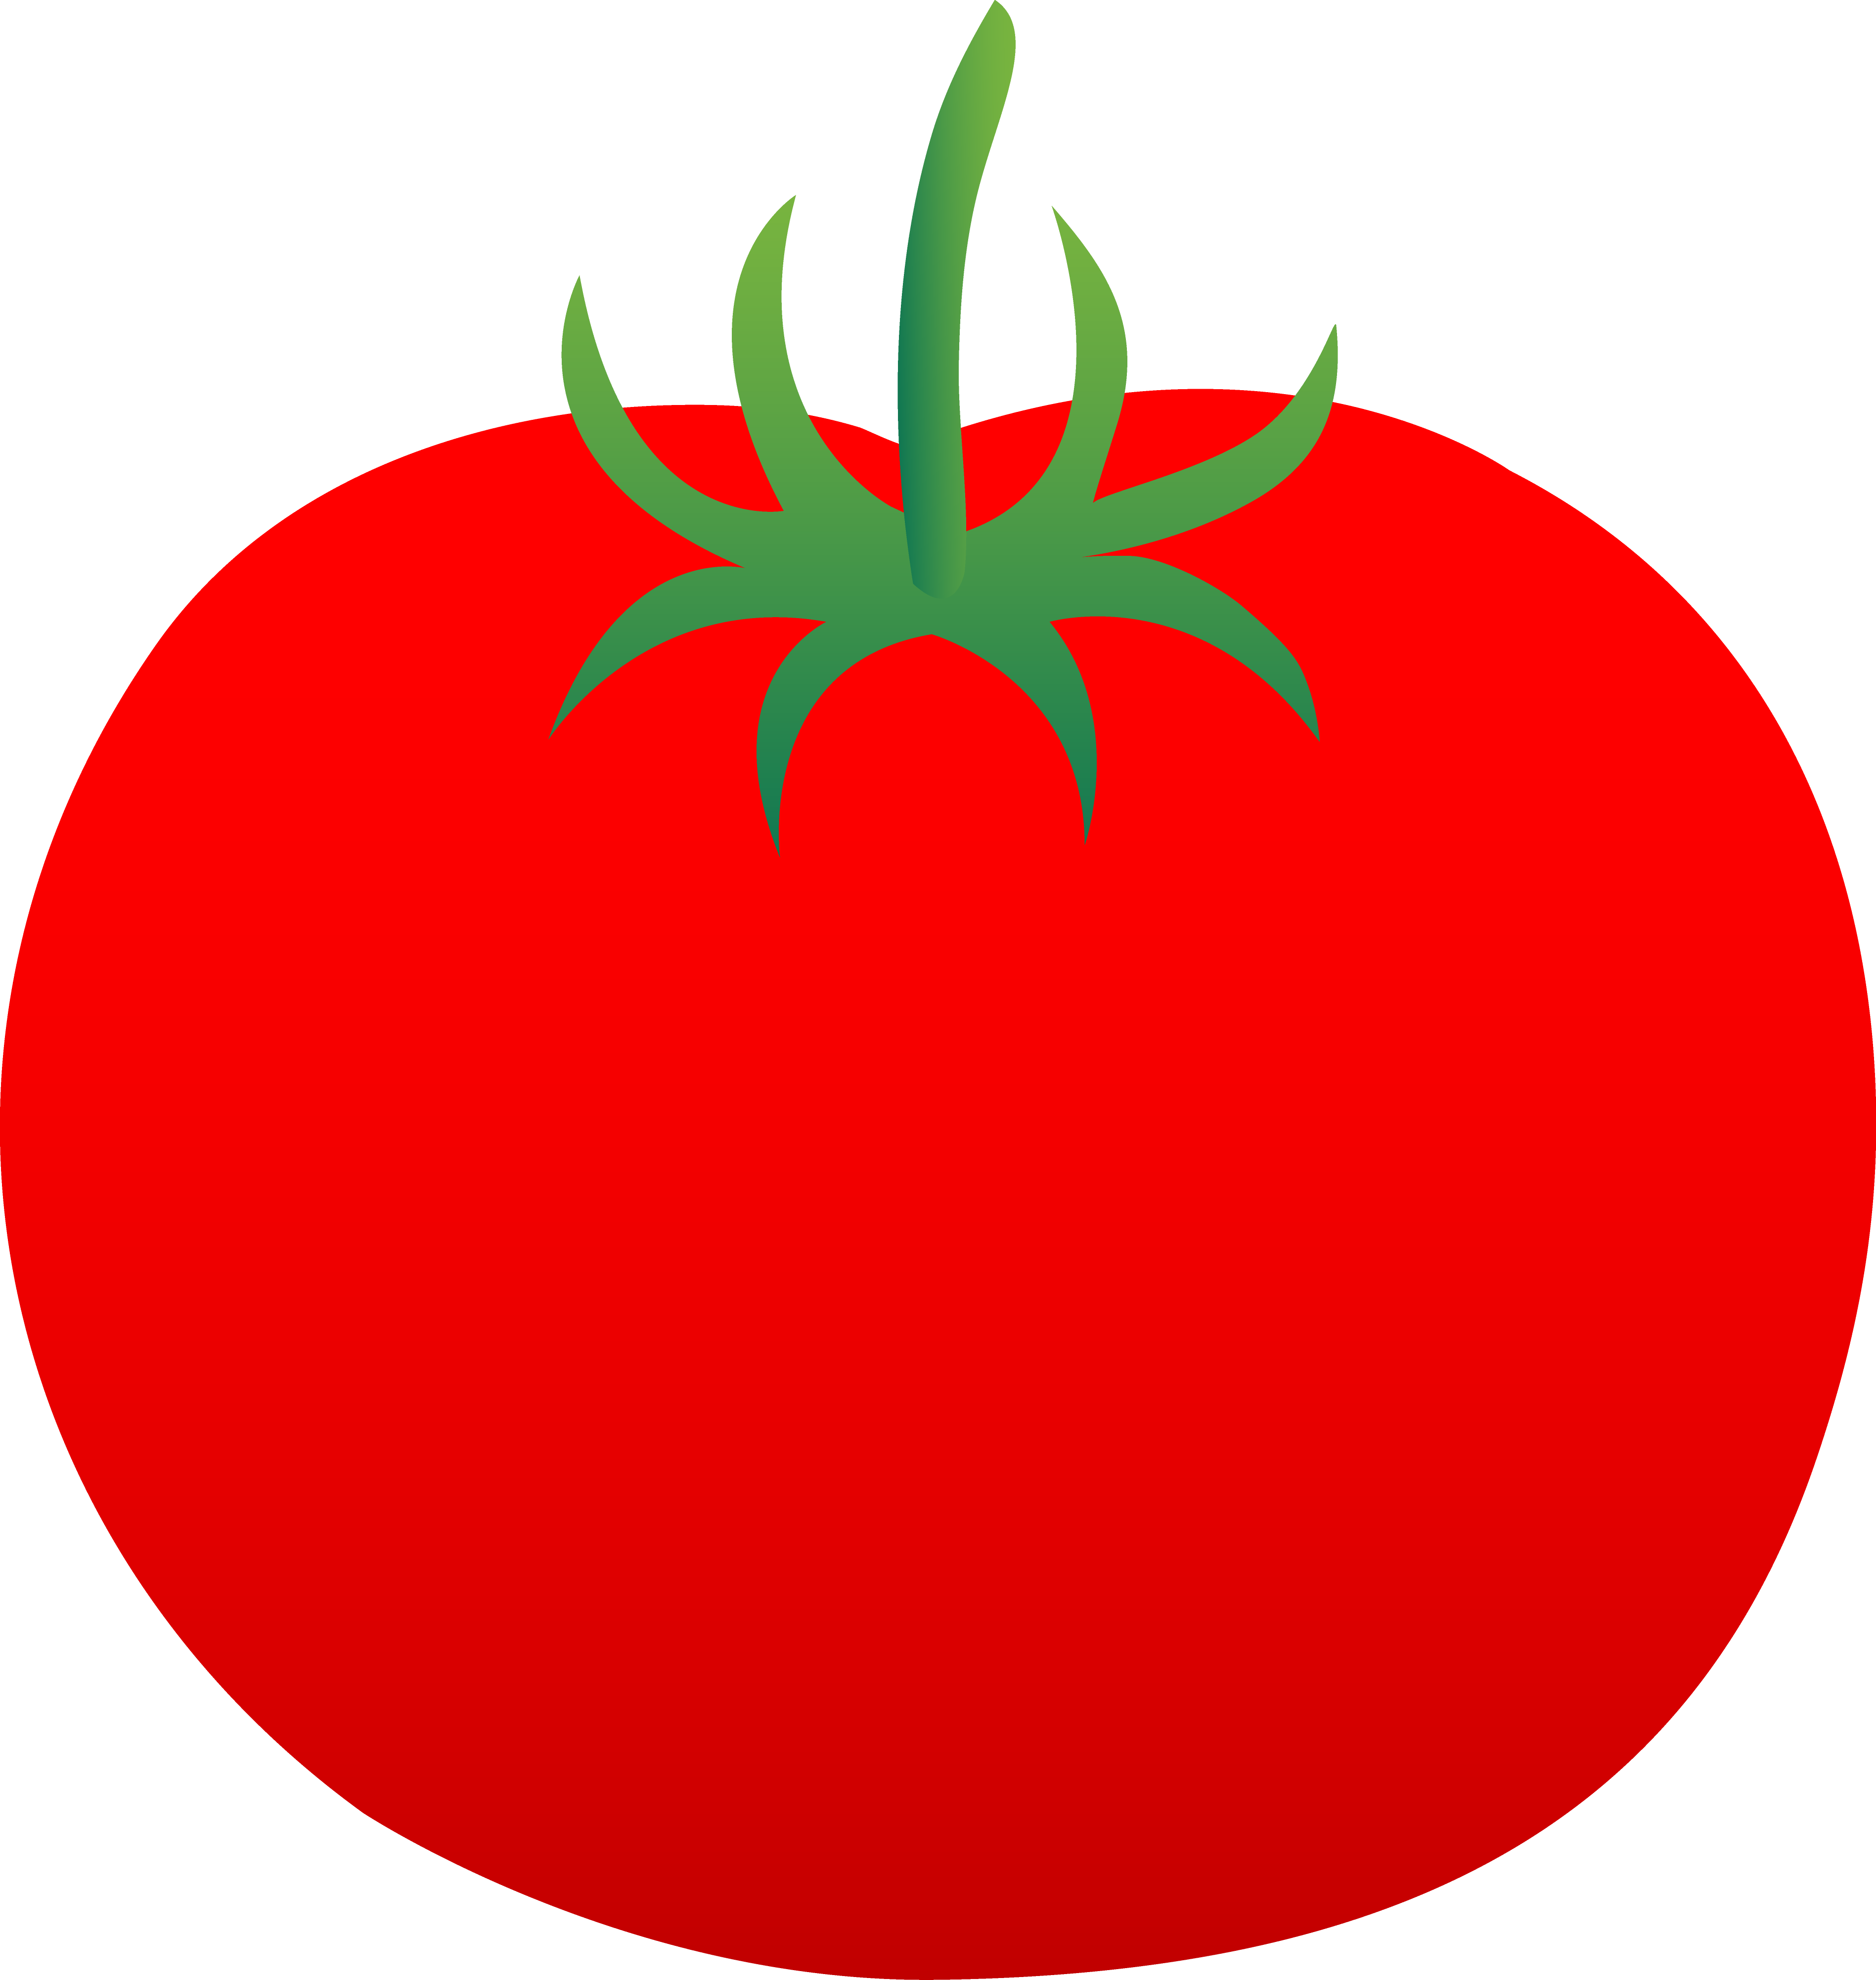 Whole Ripe Red Tomato Free Clip Art | HomeImprovementBasics.